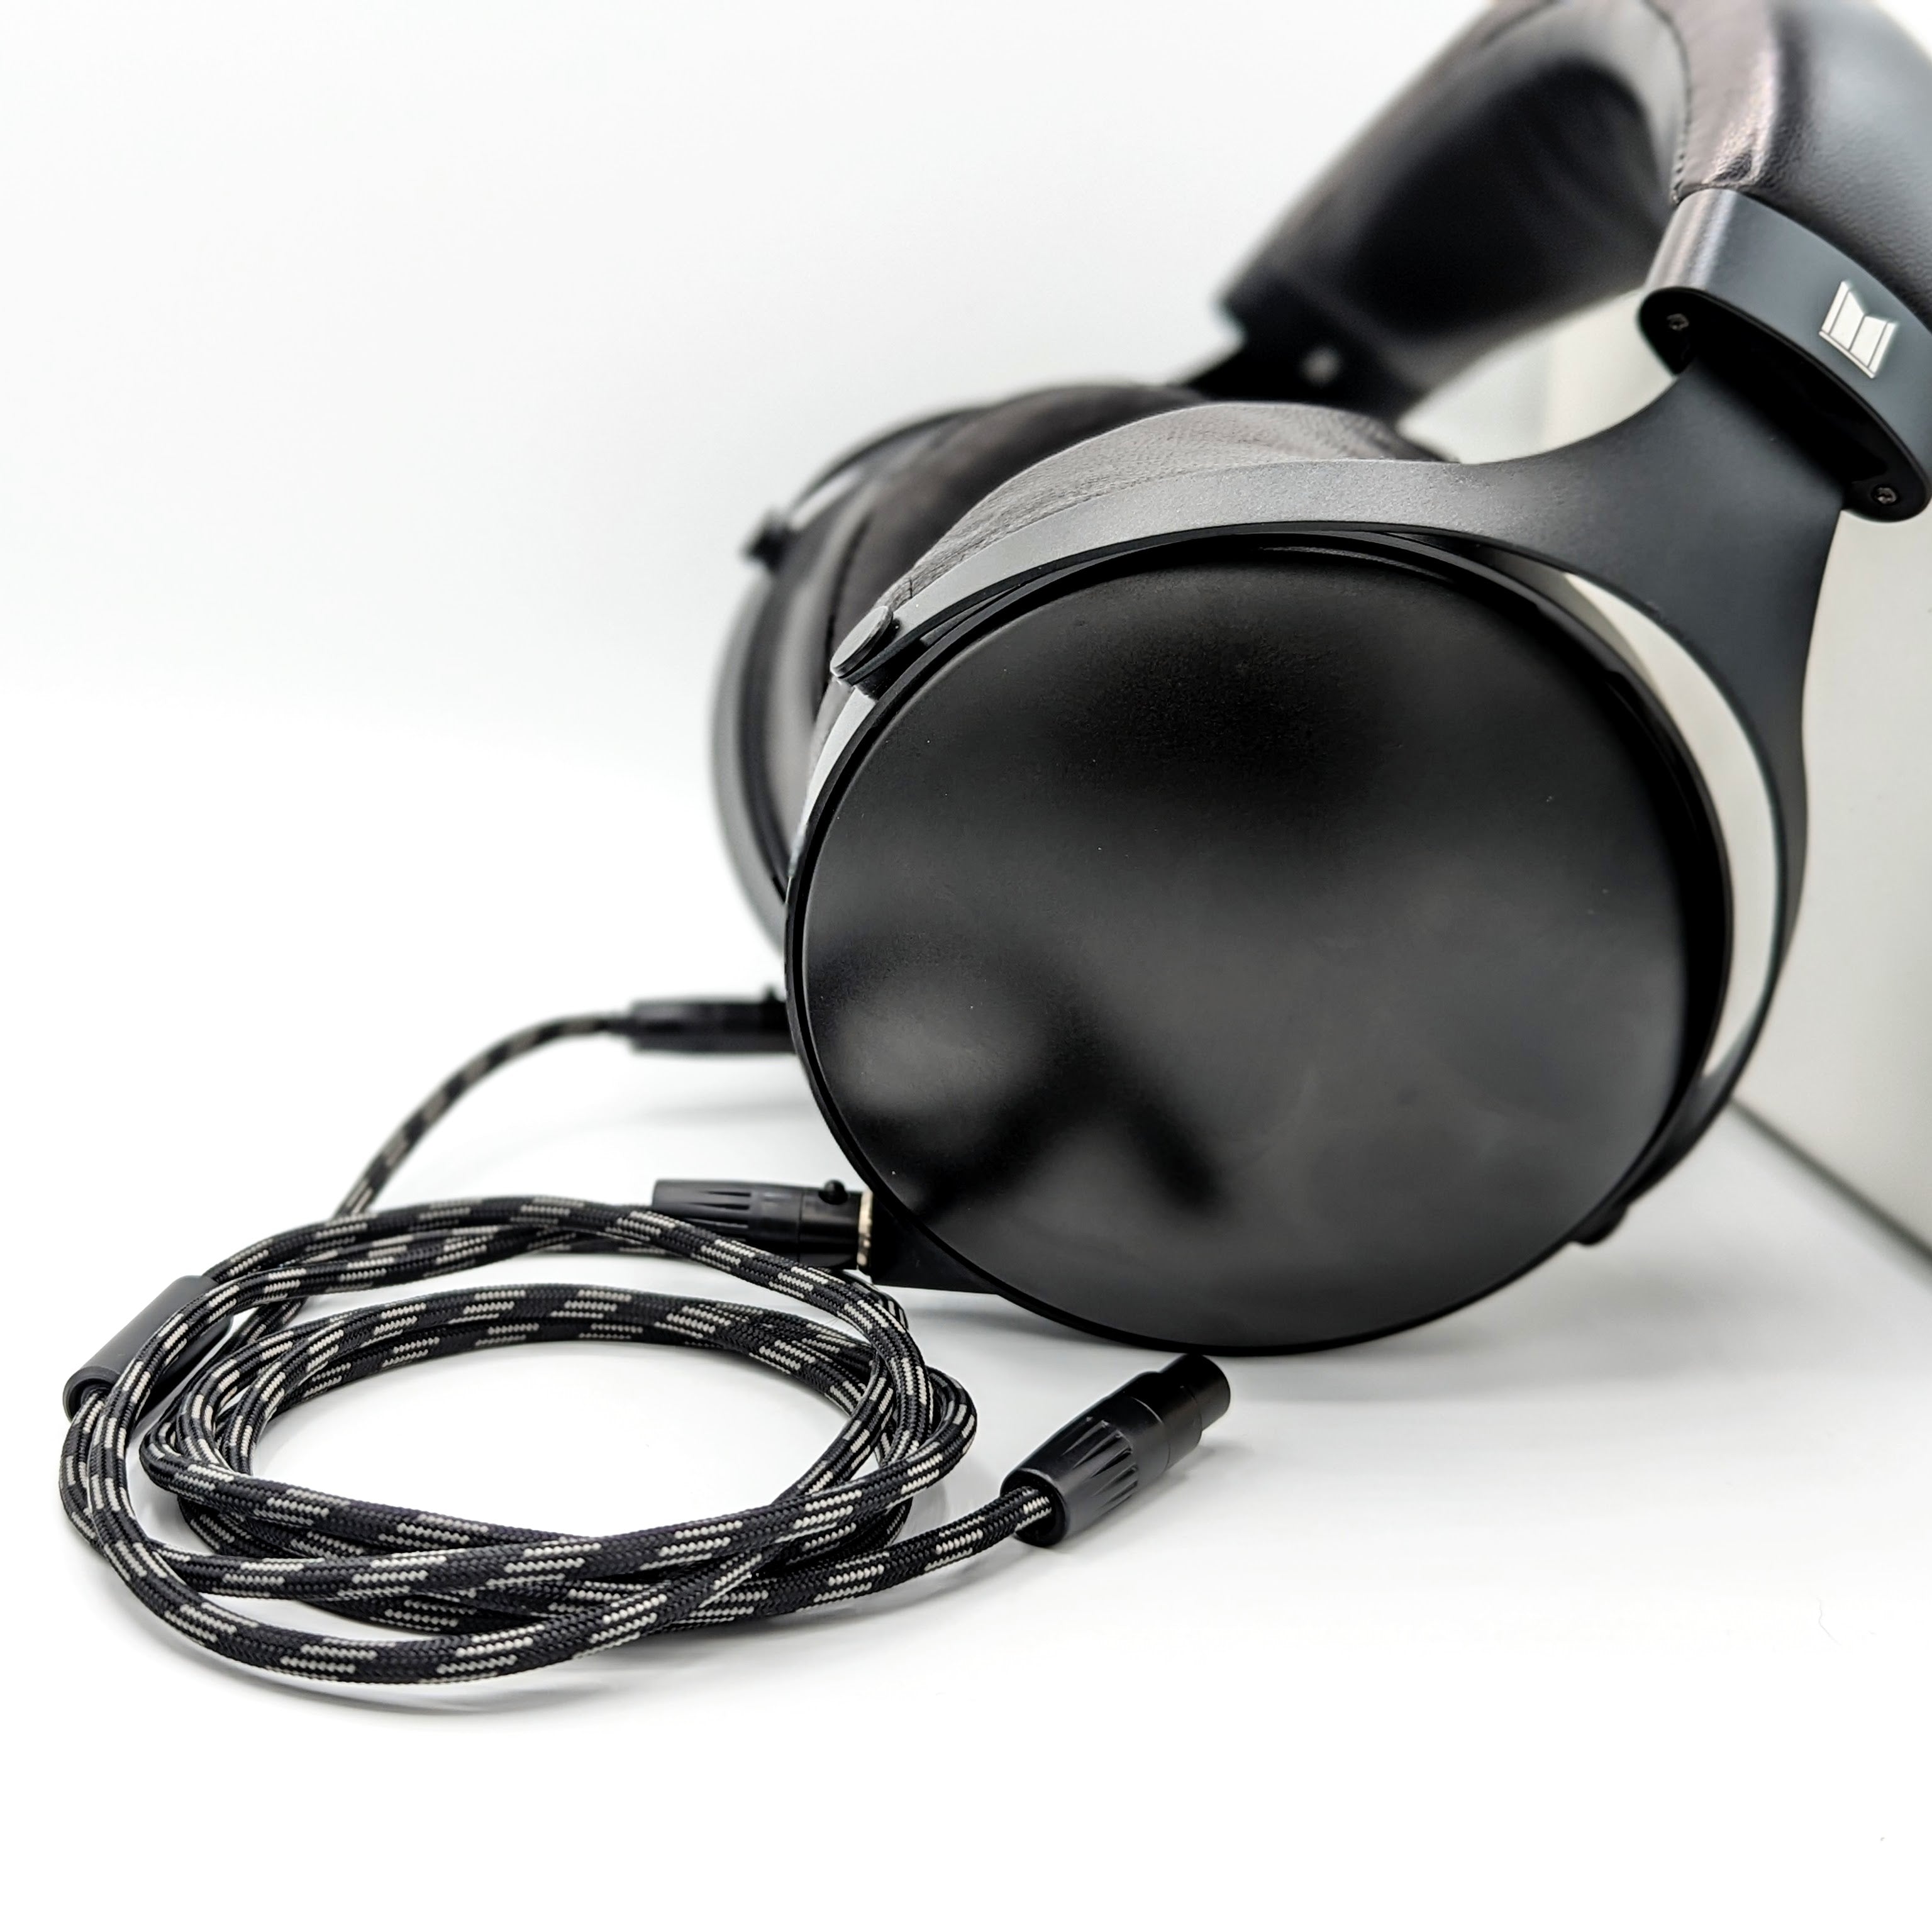 HC-10-M: Dual [F] 4-pin mini-XLR balanced headphone cable for M1570